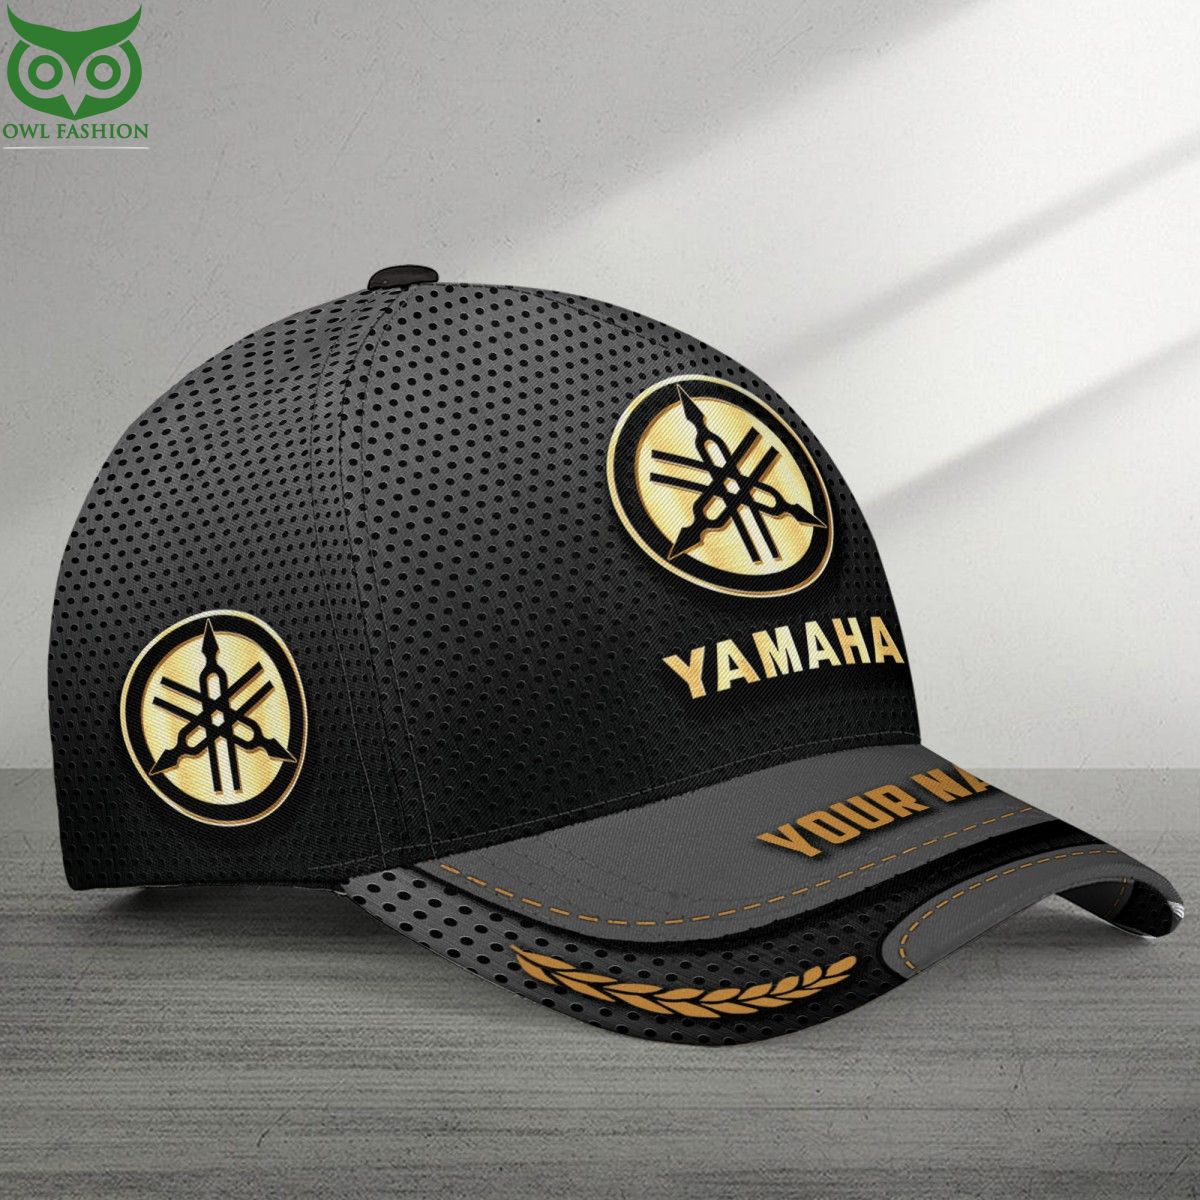 yamaha luxury car brand custom classic cap 3 QACAW.jpg